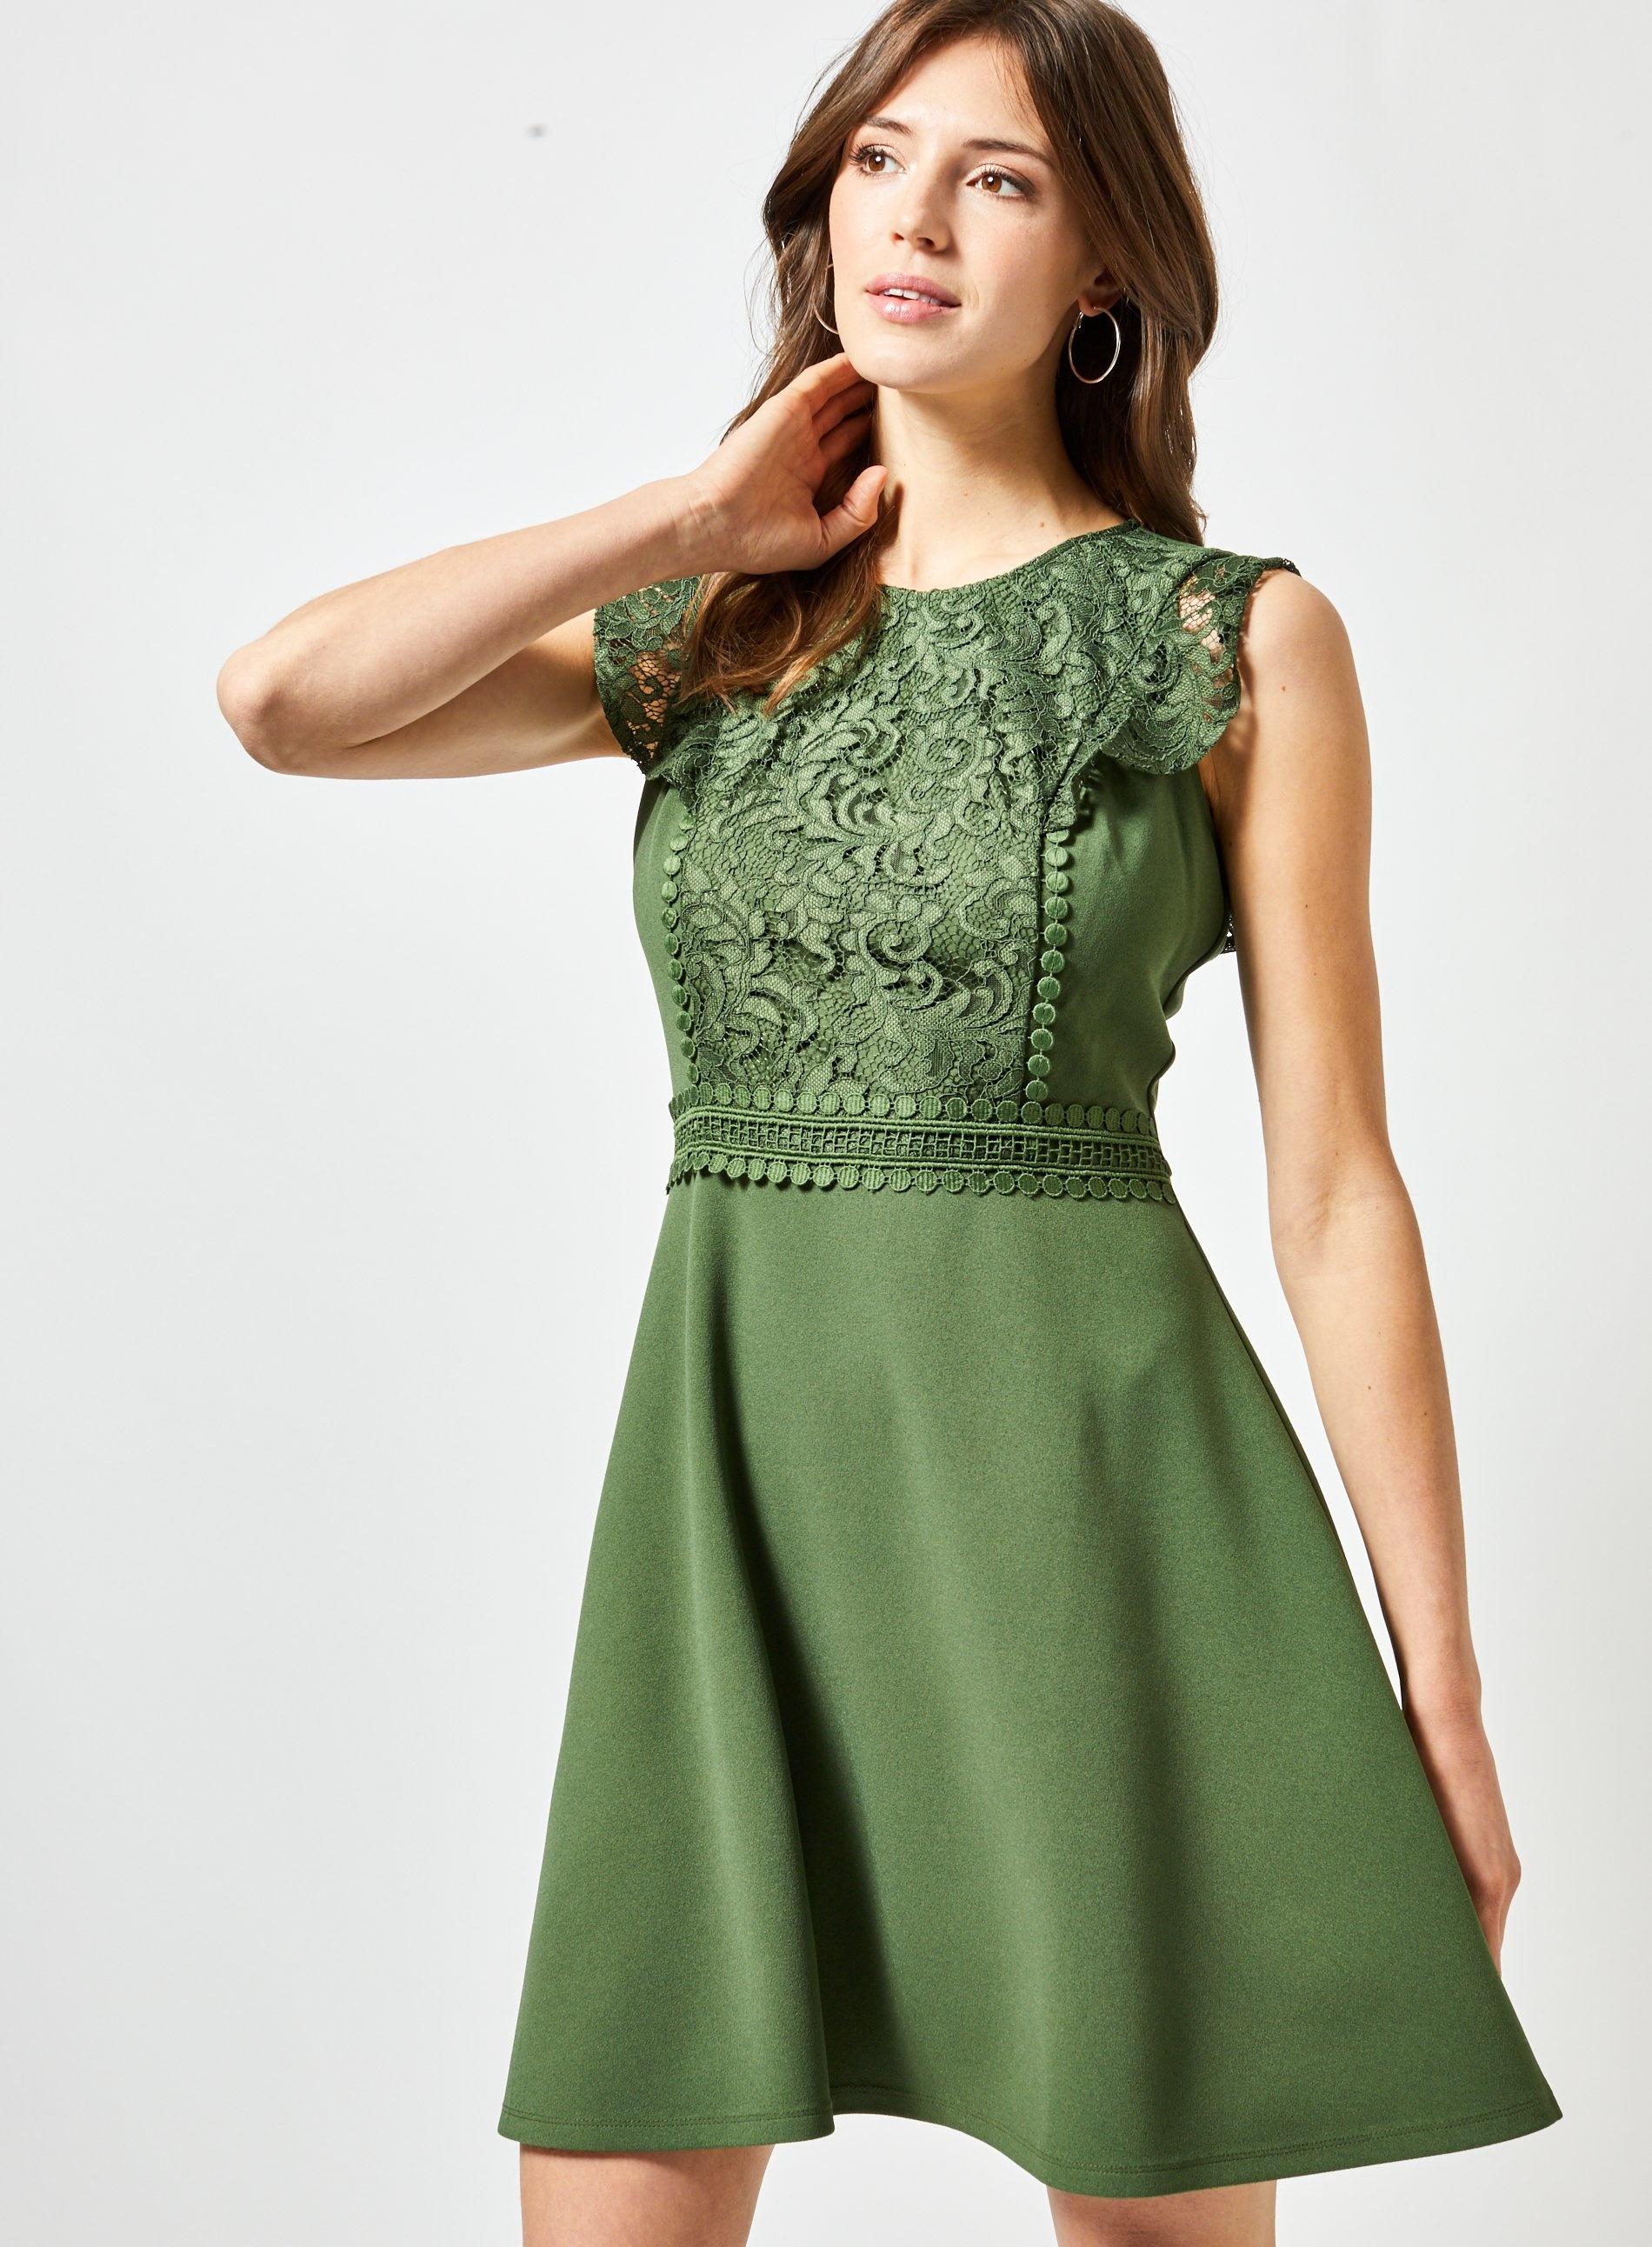 dorothy perkins sage green dress